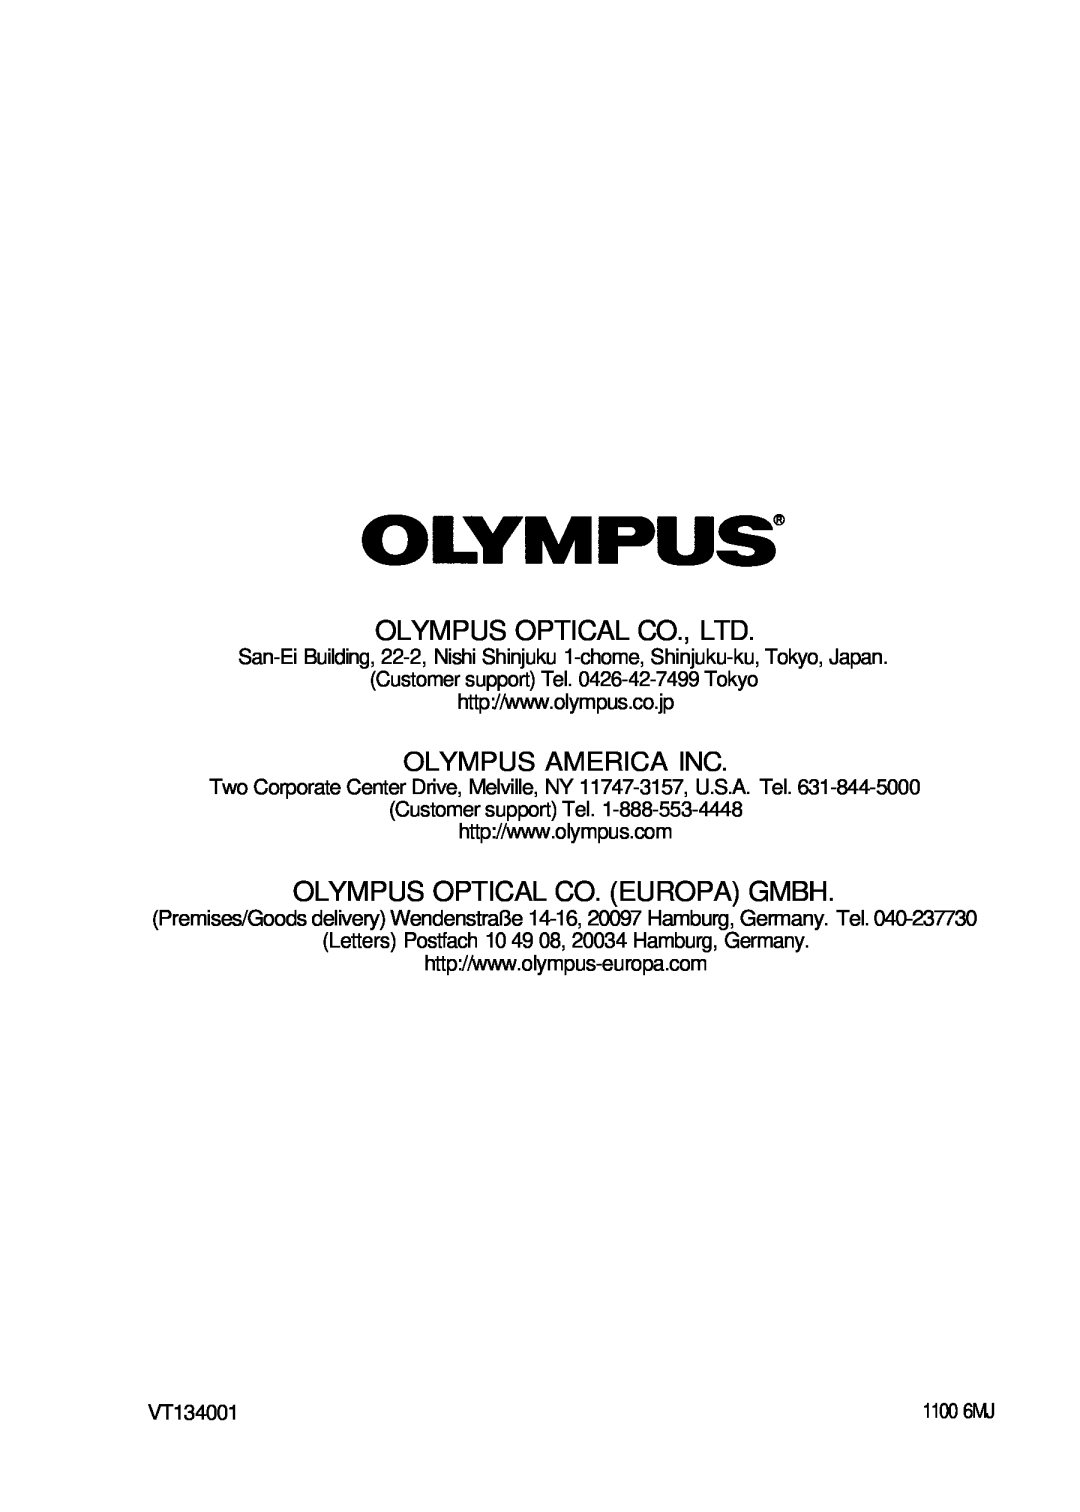 Olympus P-200 manual Olympus America Inc, Olympus Optical Co. Europa Gmbh, 1100 6MJ 